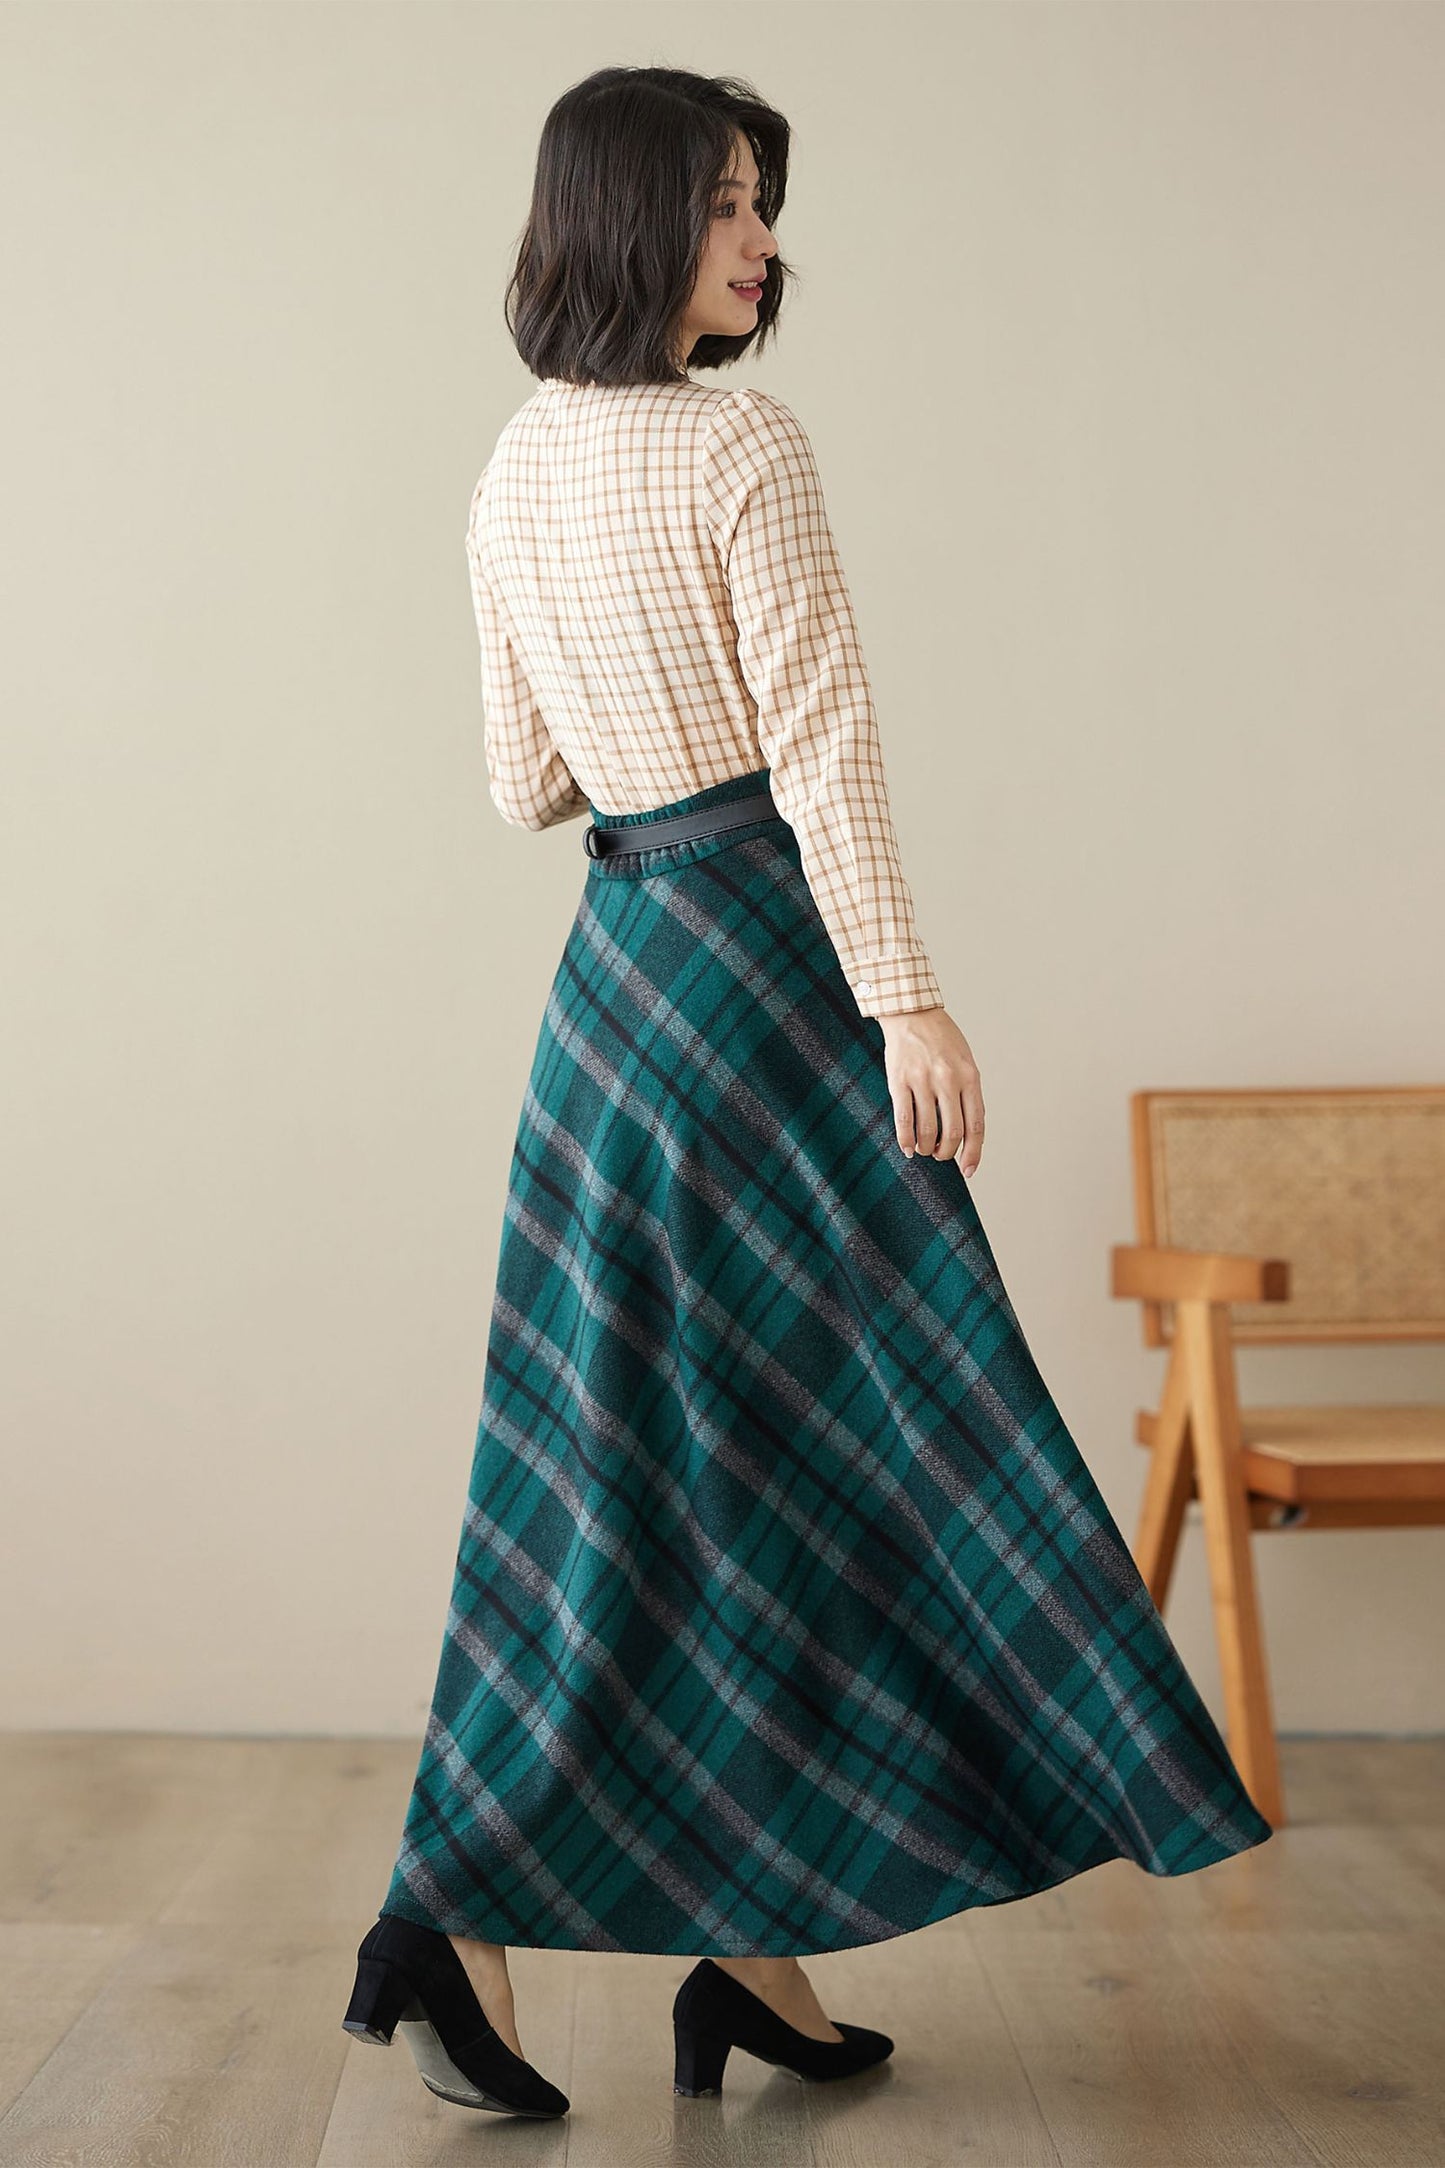 Vintage Inspired Long Wool Plaid Skirt 4628